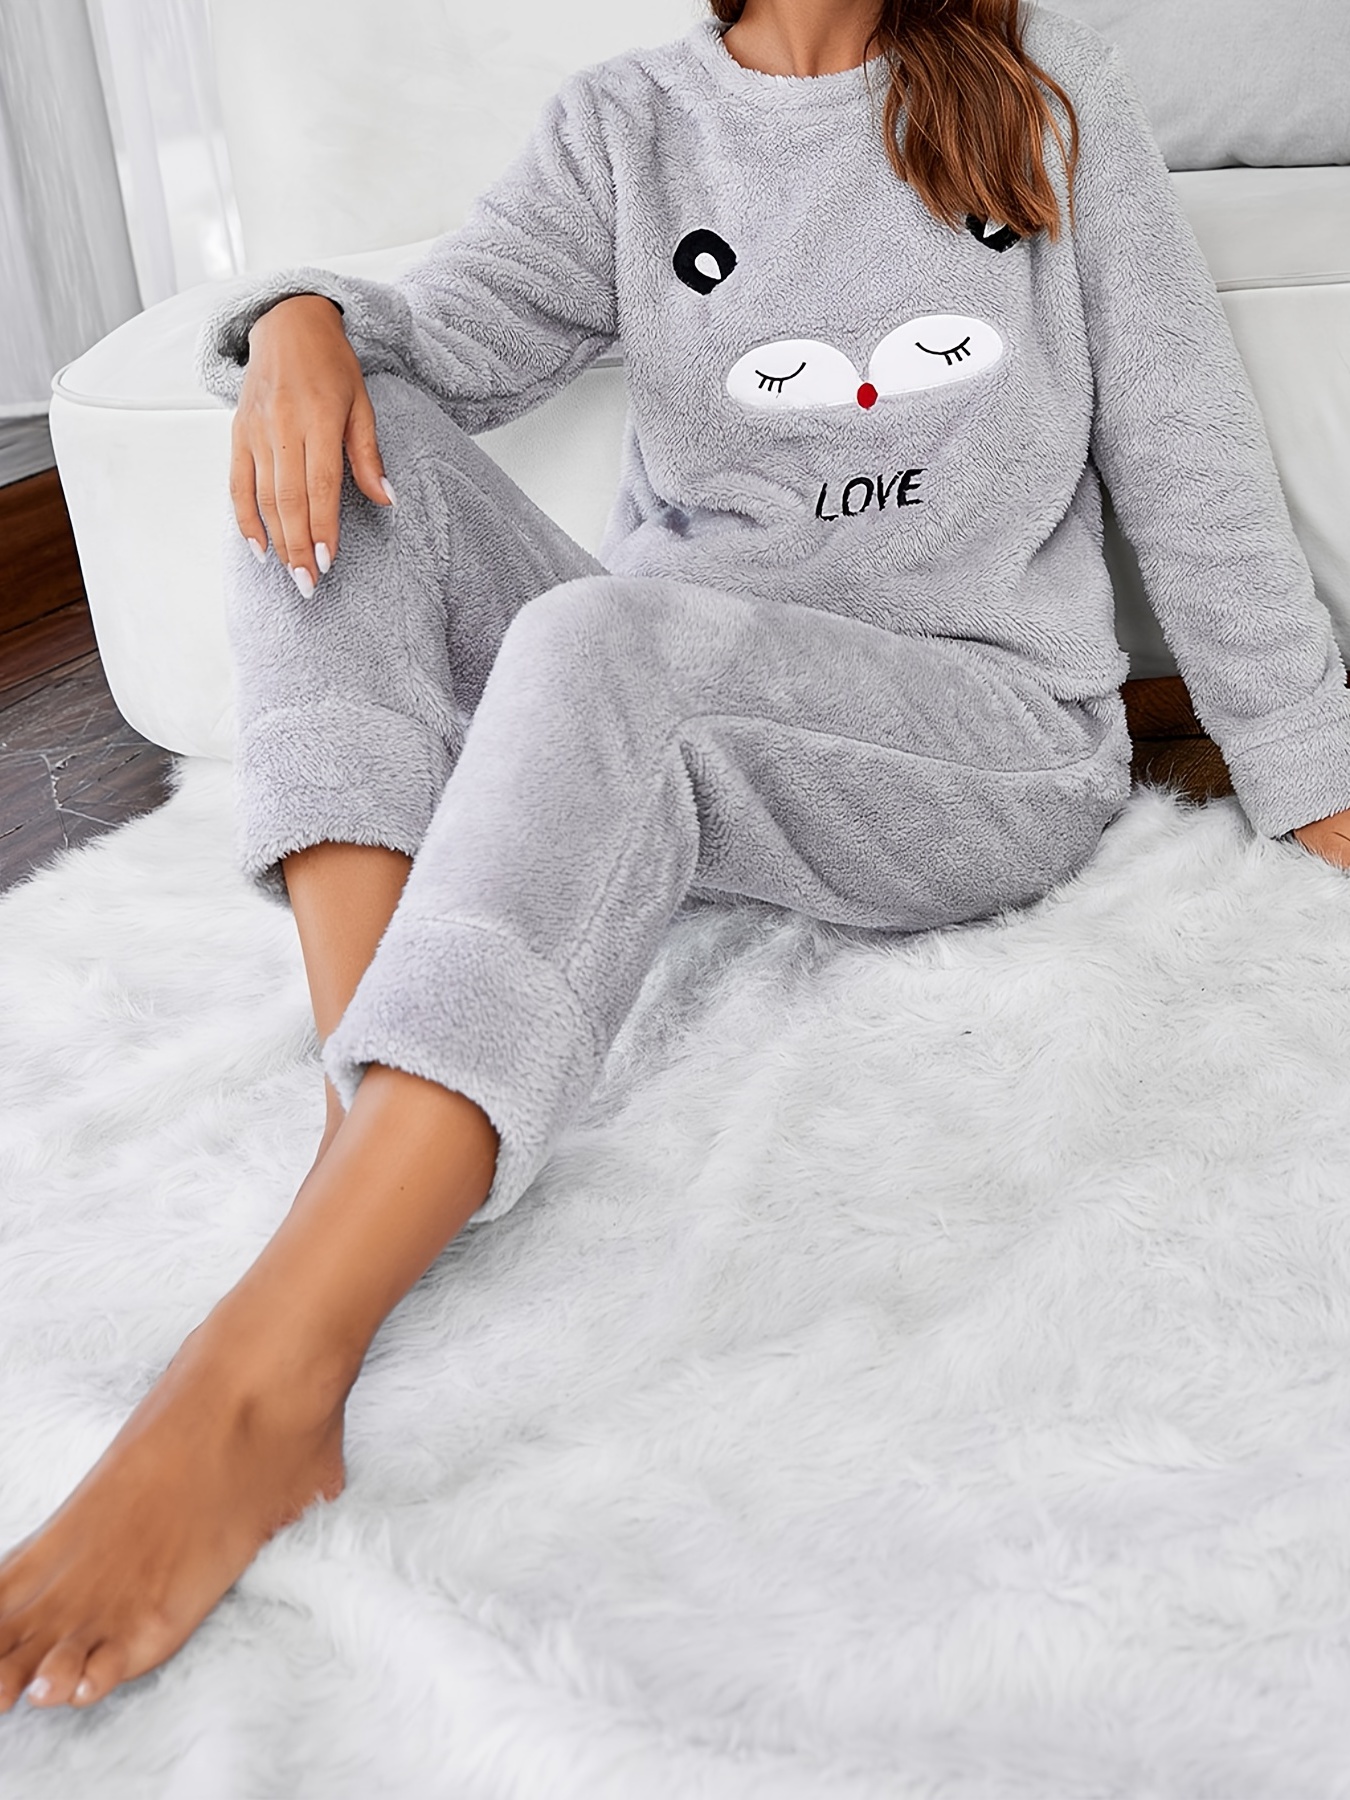 Soft Flannel Colorblock Pajamas Set, Thermal Button Up Blouse Pajama  Outerwear & Elastic Waistband Pajama Pants, Women's Loungewear & Sleepwear